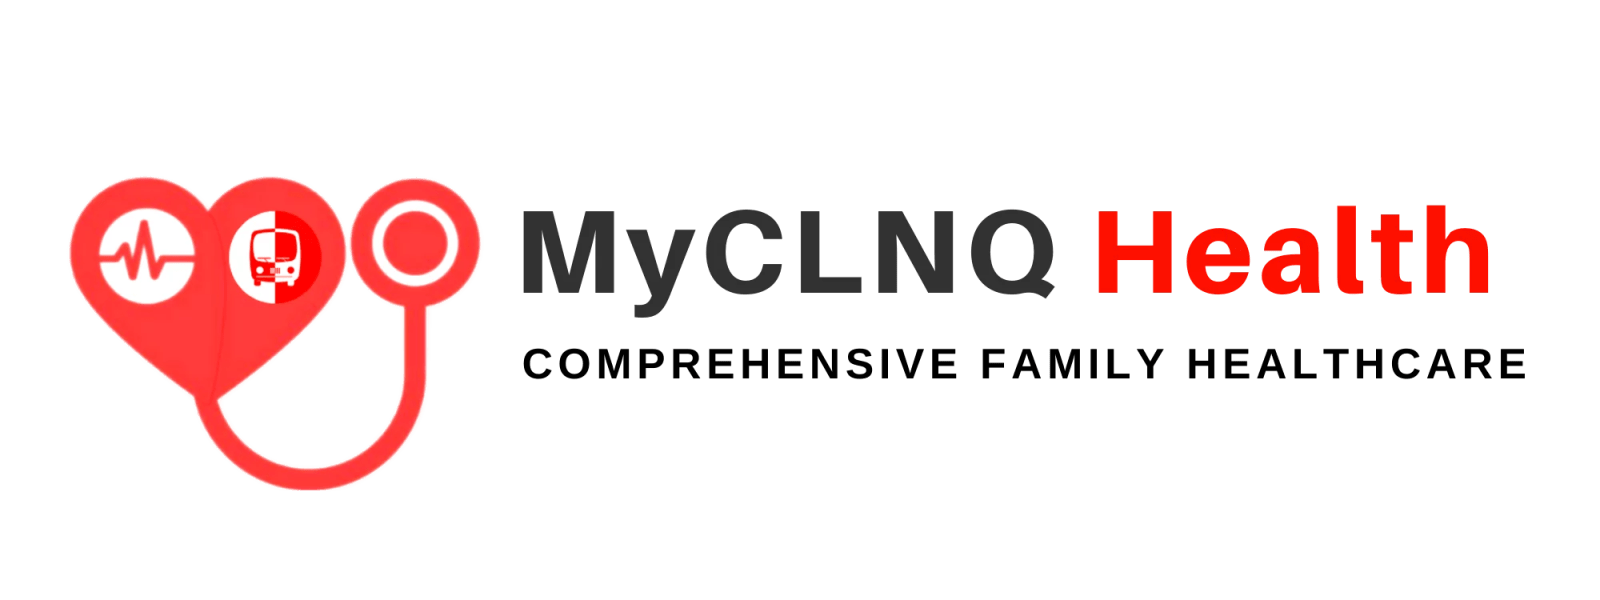 MyCLNQ Health